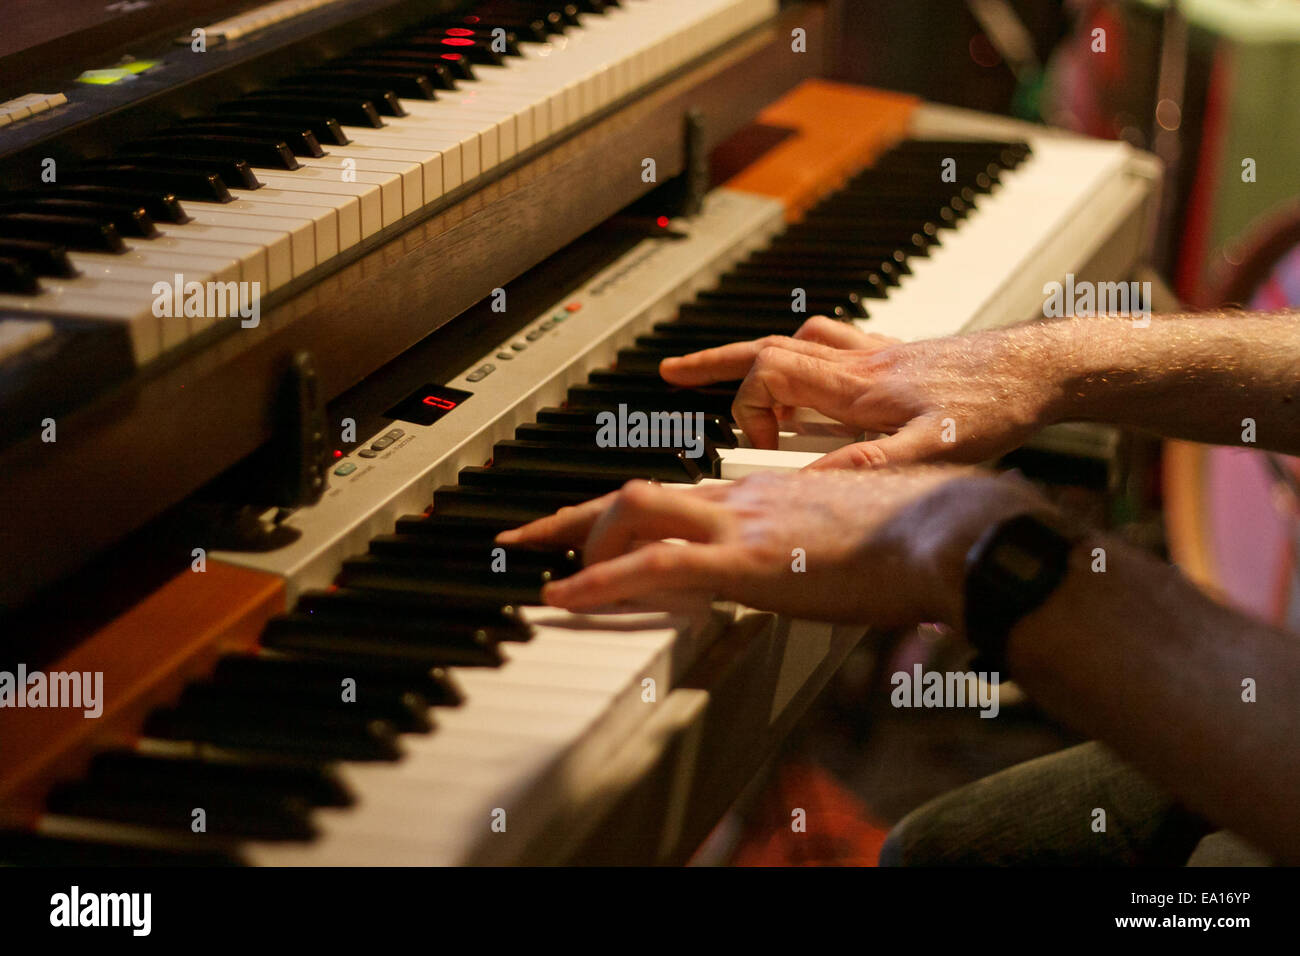 Hands on organ piano Stock Photo - Alamy